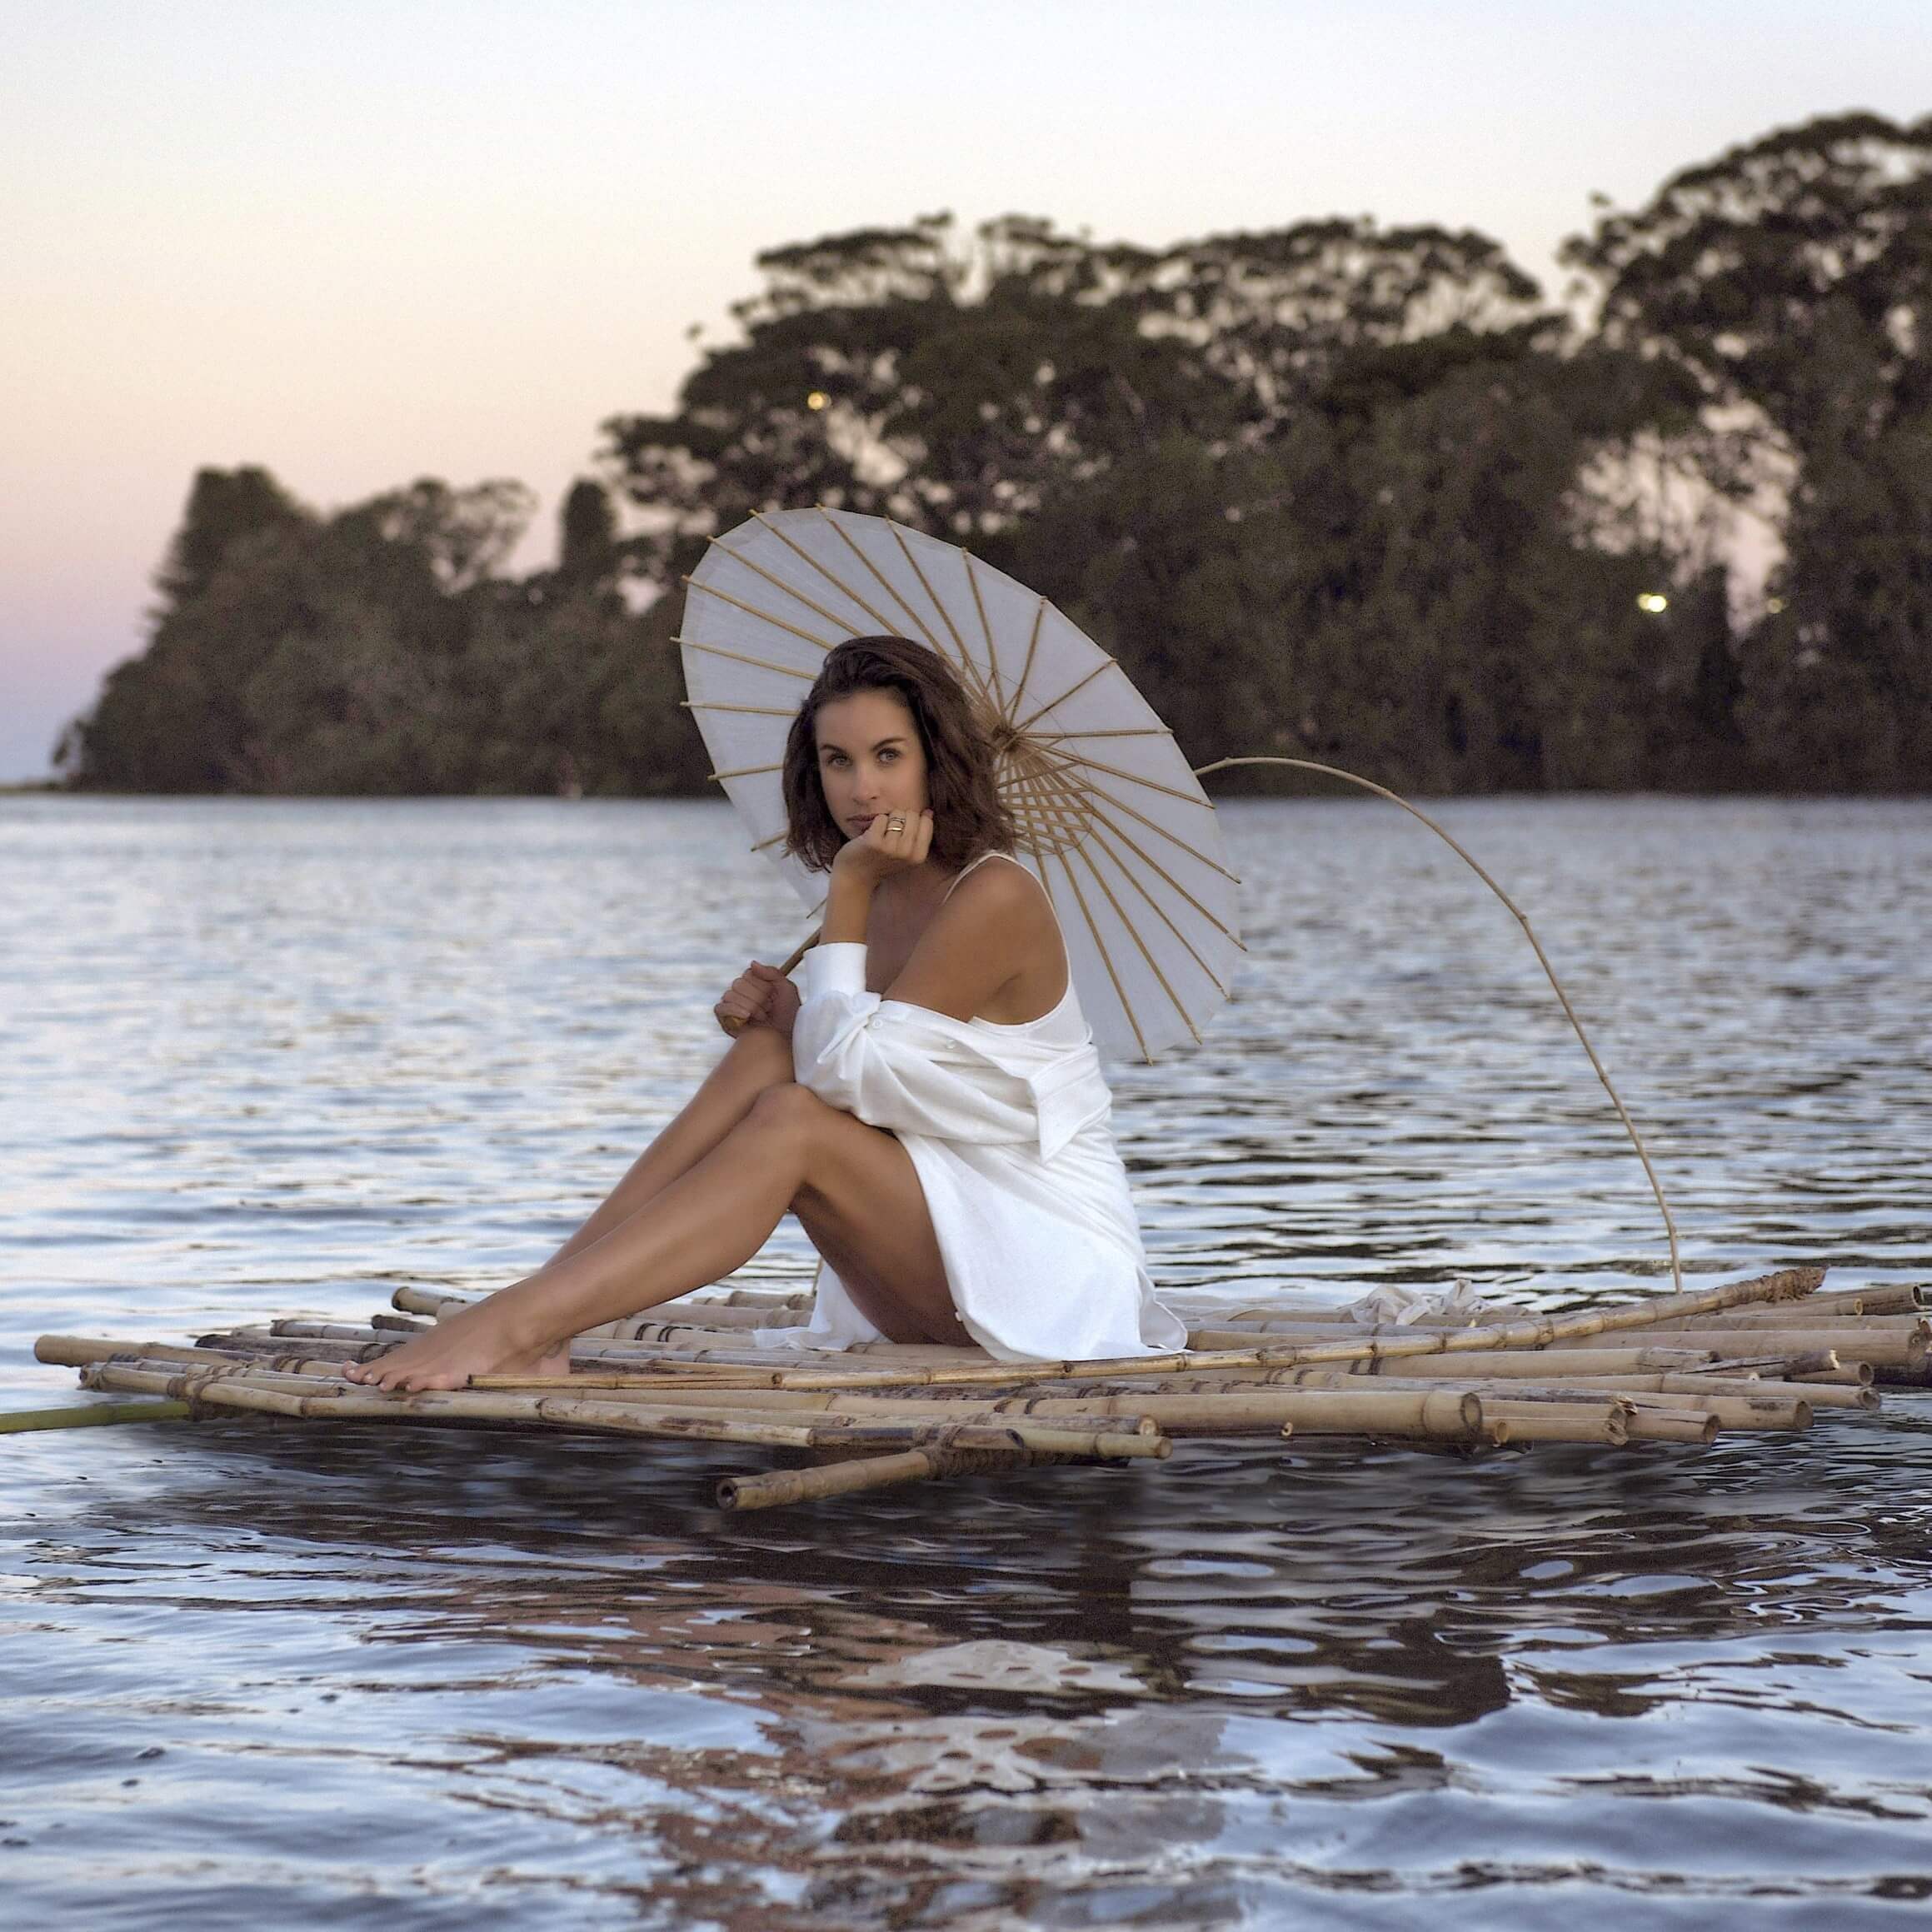 female artist afloat on handbuilt raft with stylish umbrella